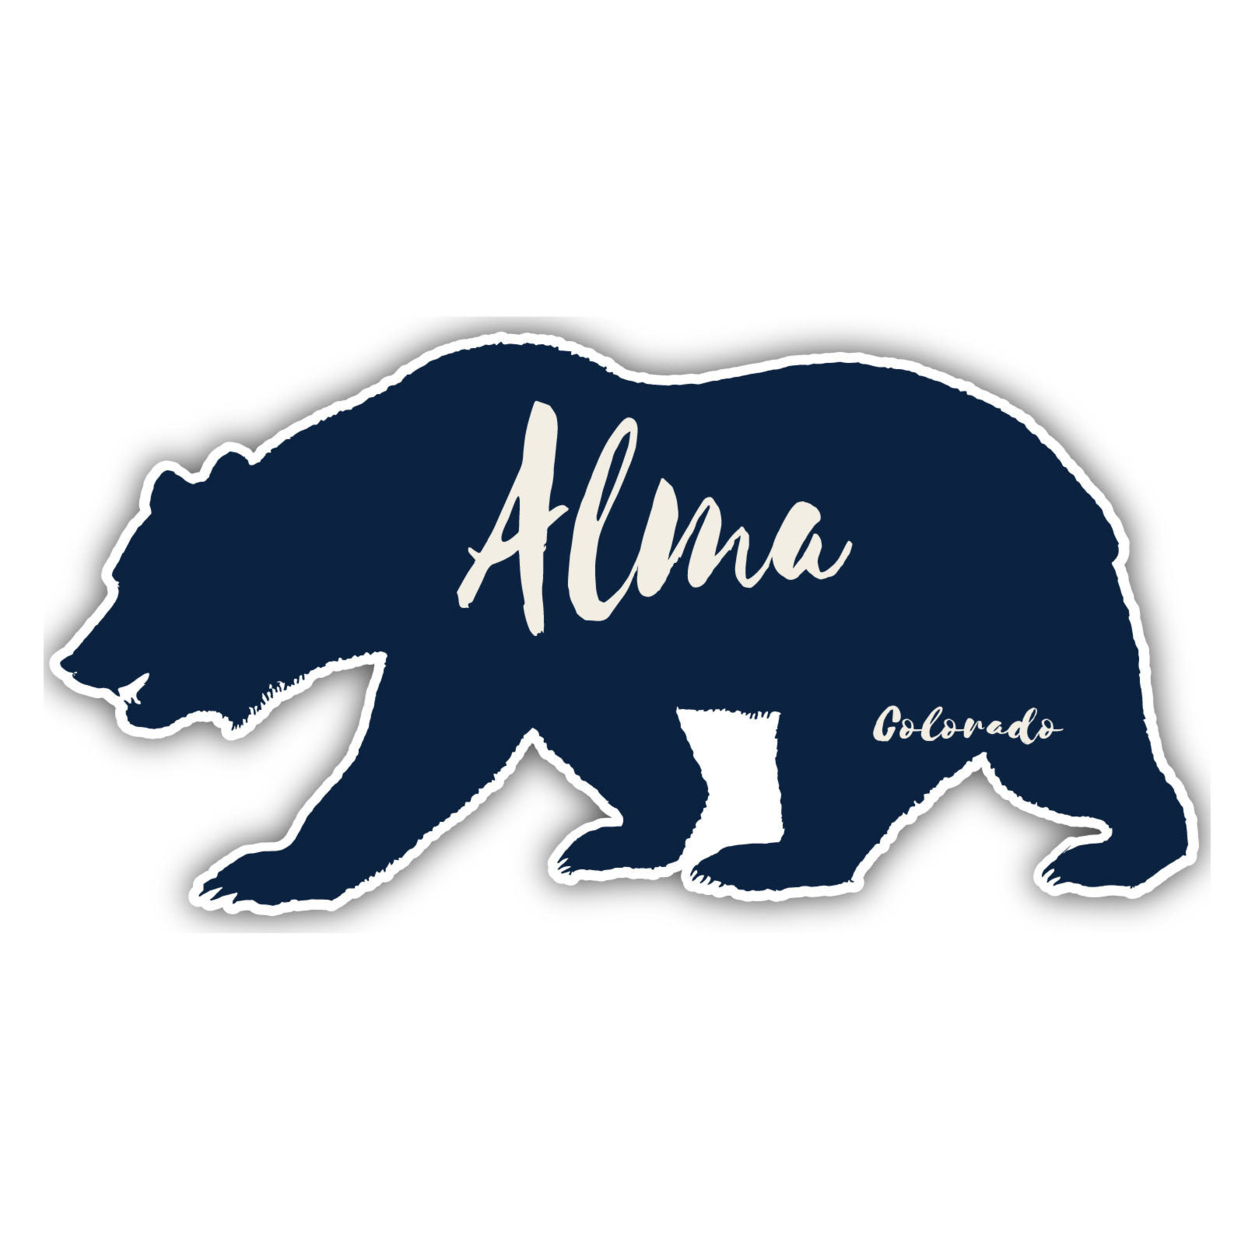 Alma Colorado Souvenir Decorative Stickers (Choose Theme And Size) - Single Unit, 4-Inch, Tent